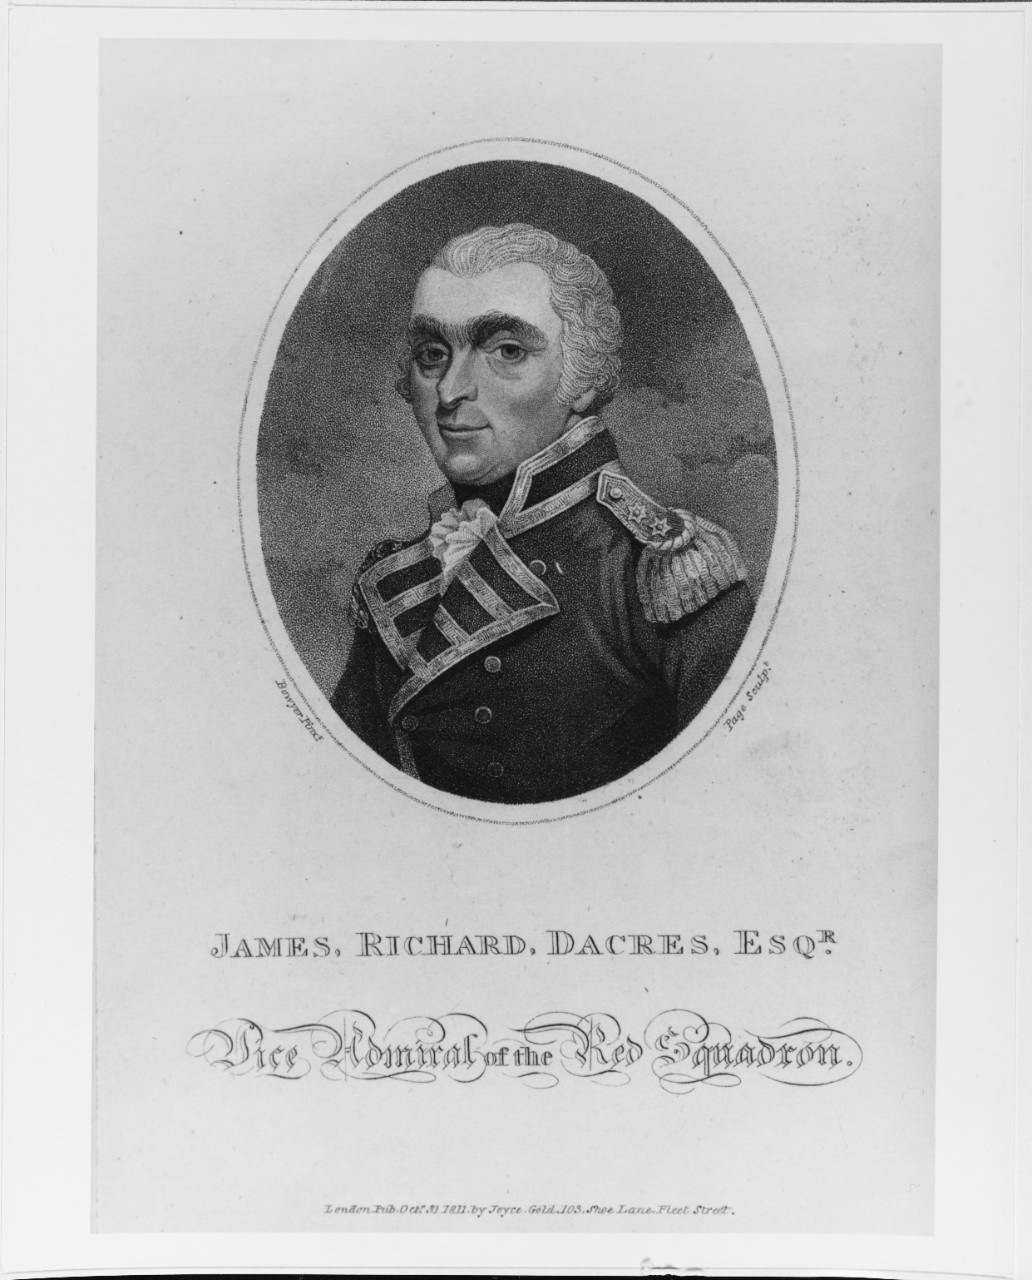 James Richard Dacres (1749-1810), British Vice-Admiral